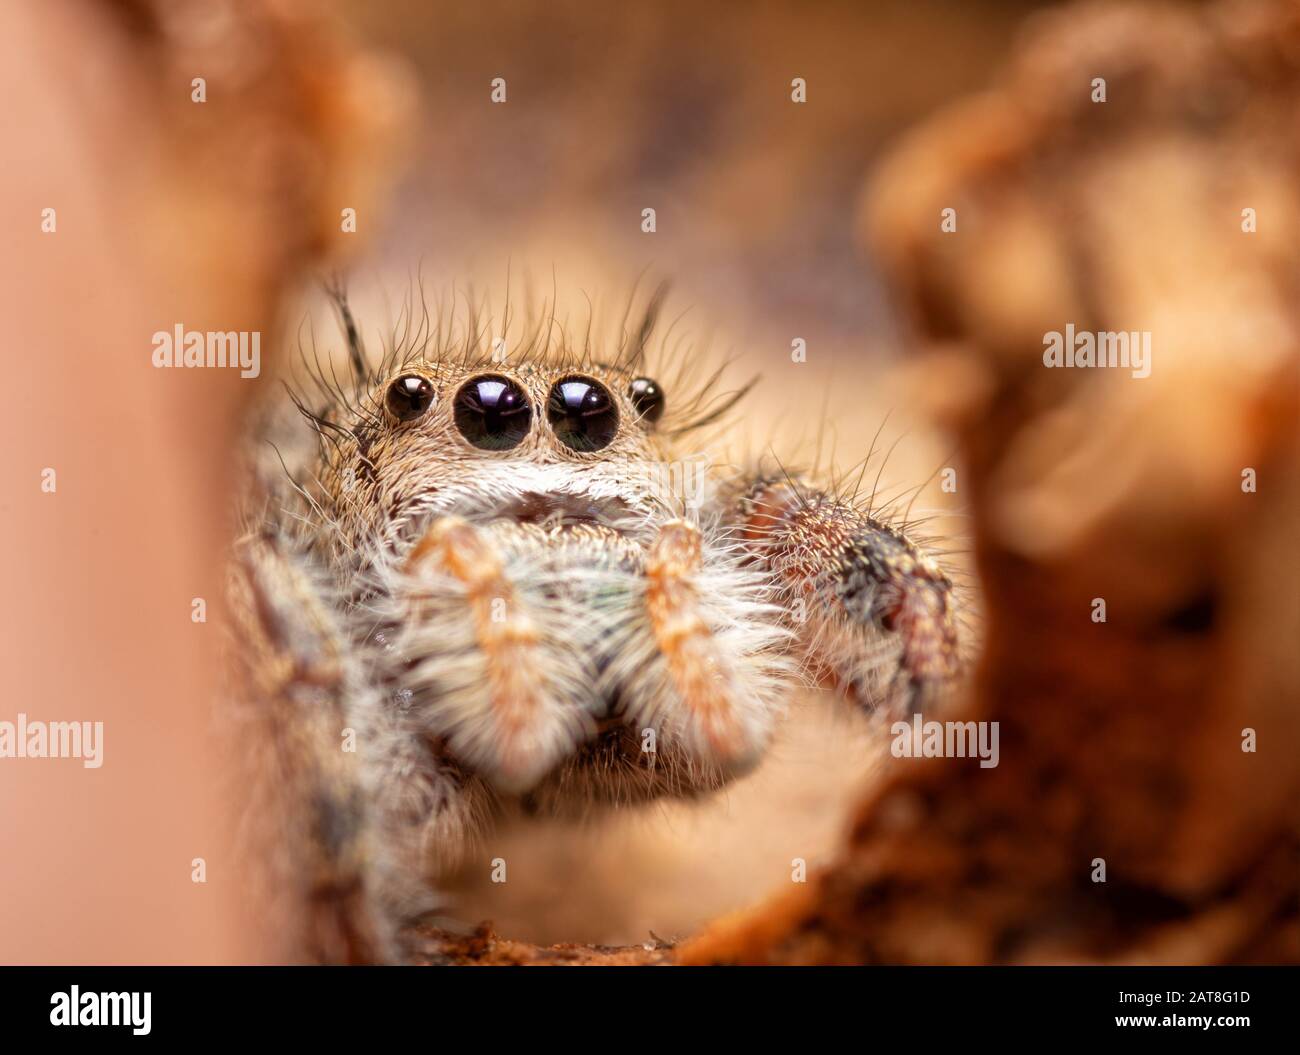 Beautiful little Phidippus princeps jumping spider peeking through a crack in an acorn cap Stock Photo